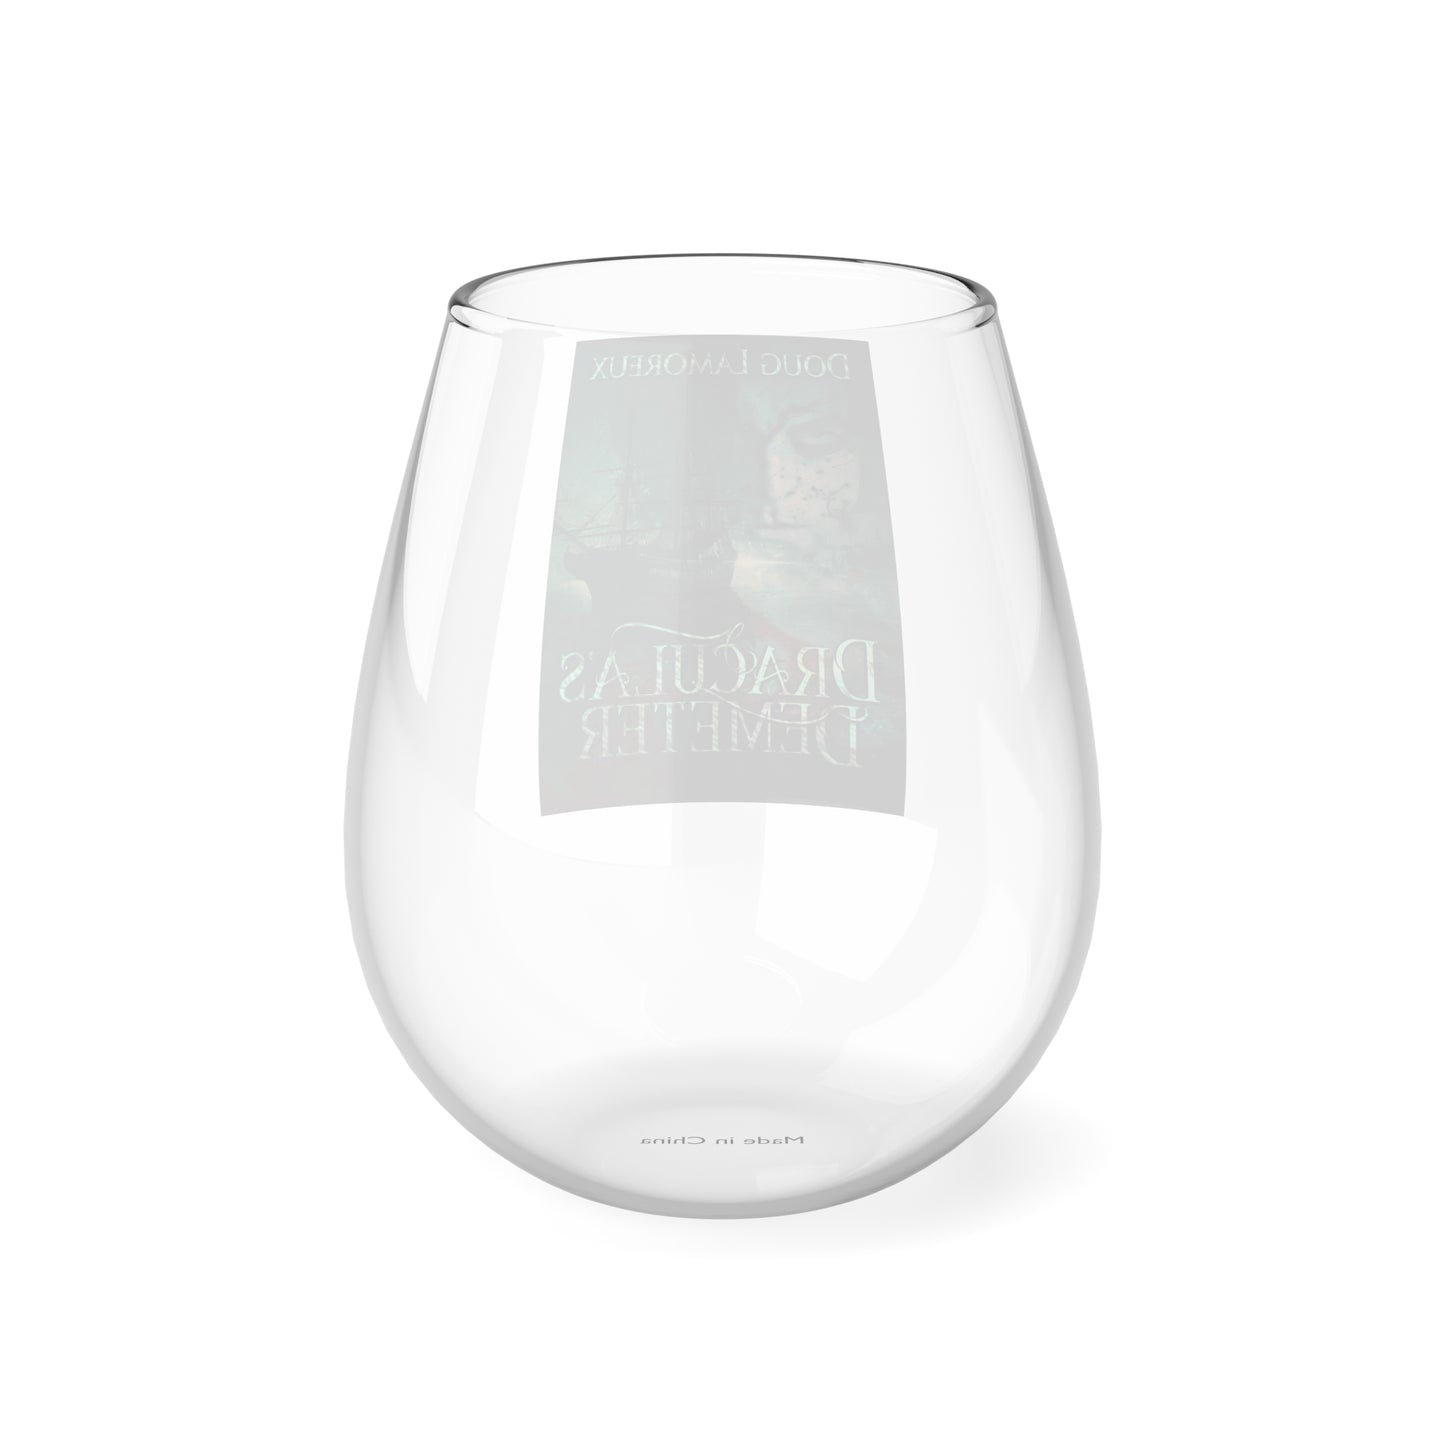 Dracula's Demeter - Stemless Wine Glass, 11.75oz